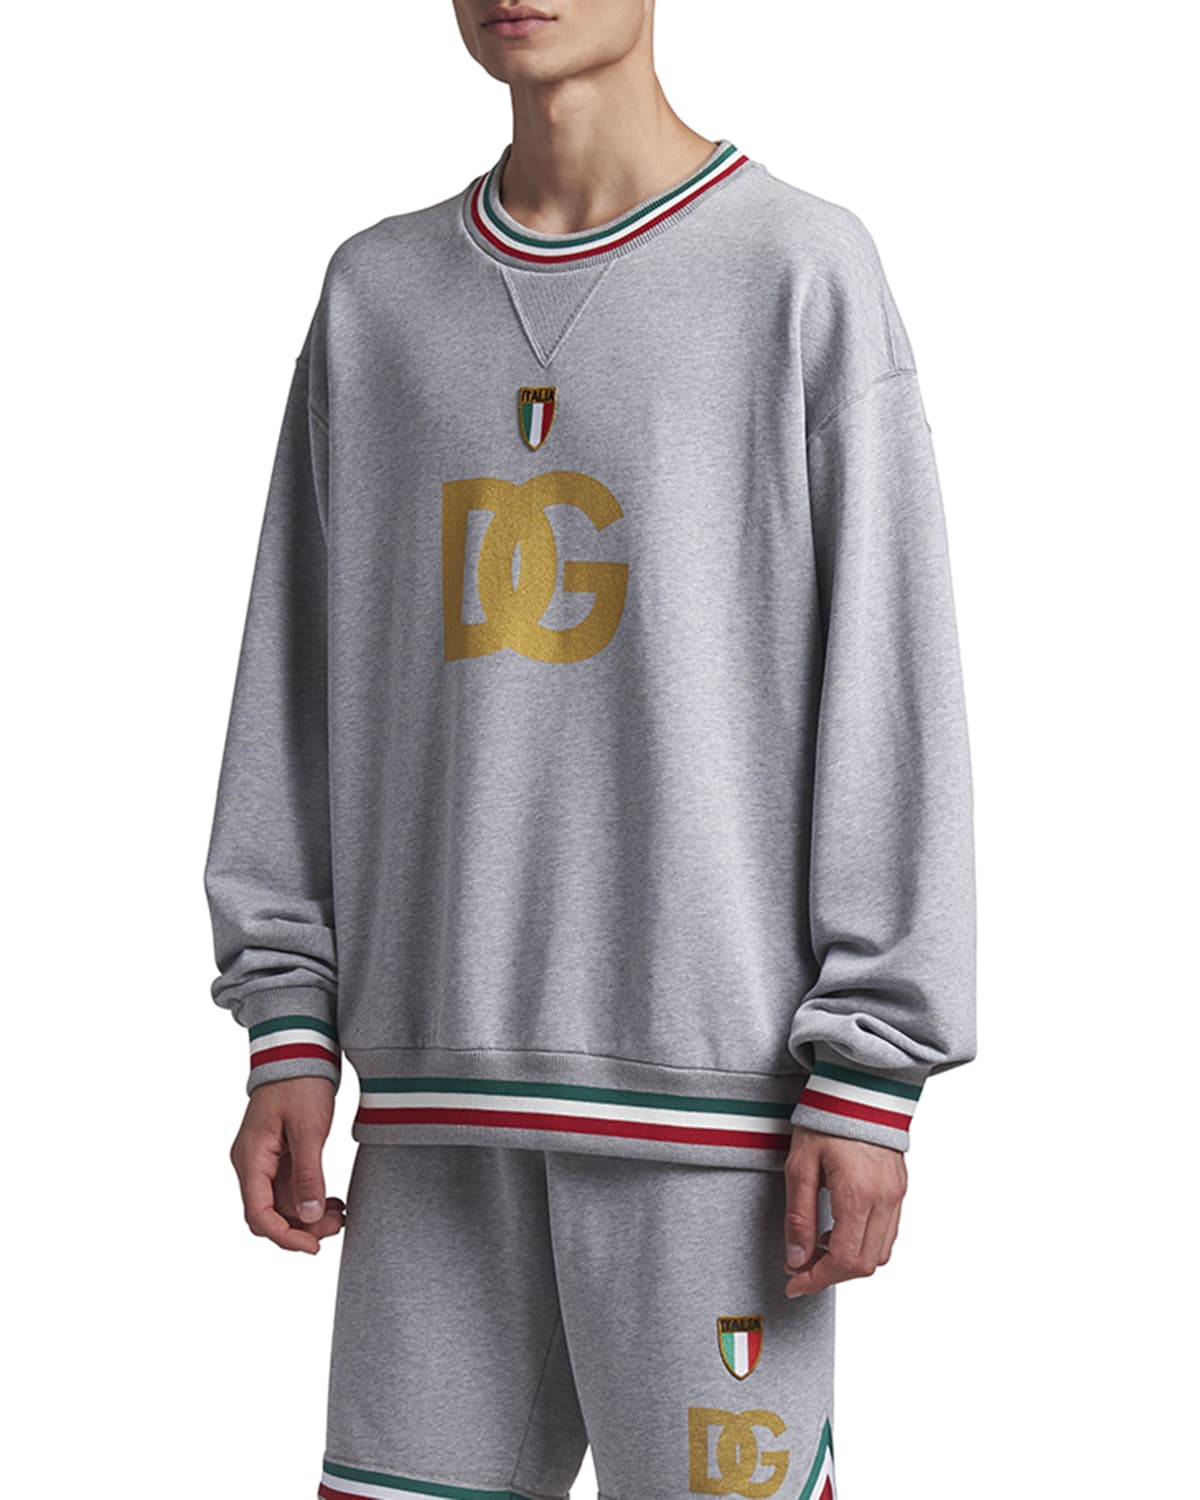 Men's DG Italia Gym Sweatshirt